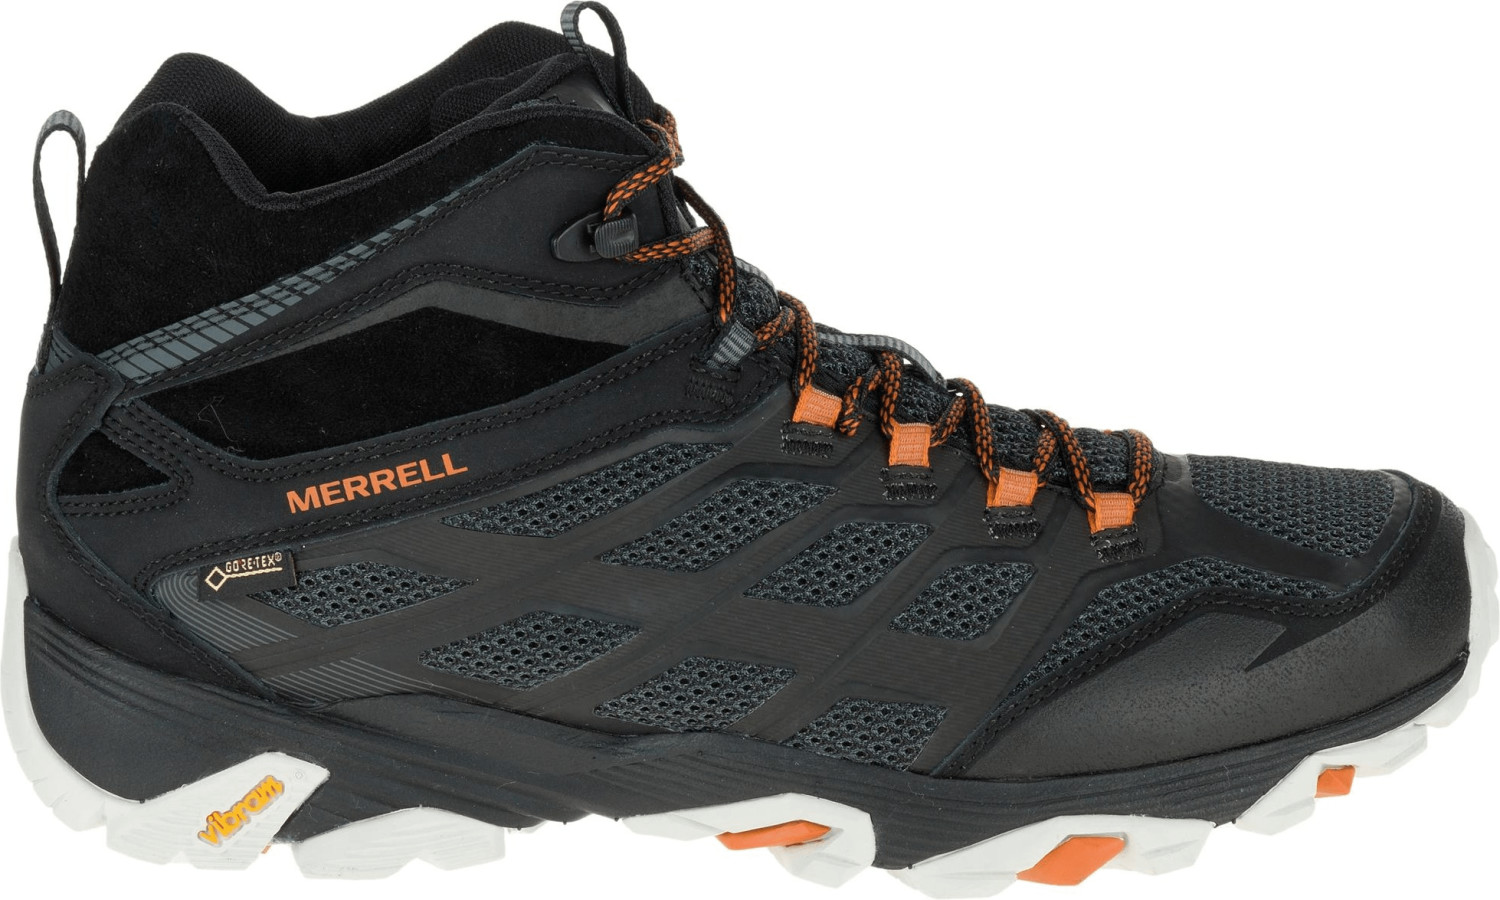 Merrell Moab FST Mid GTX black/orange